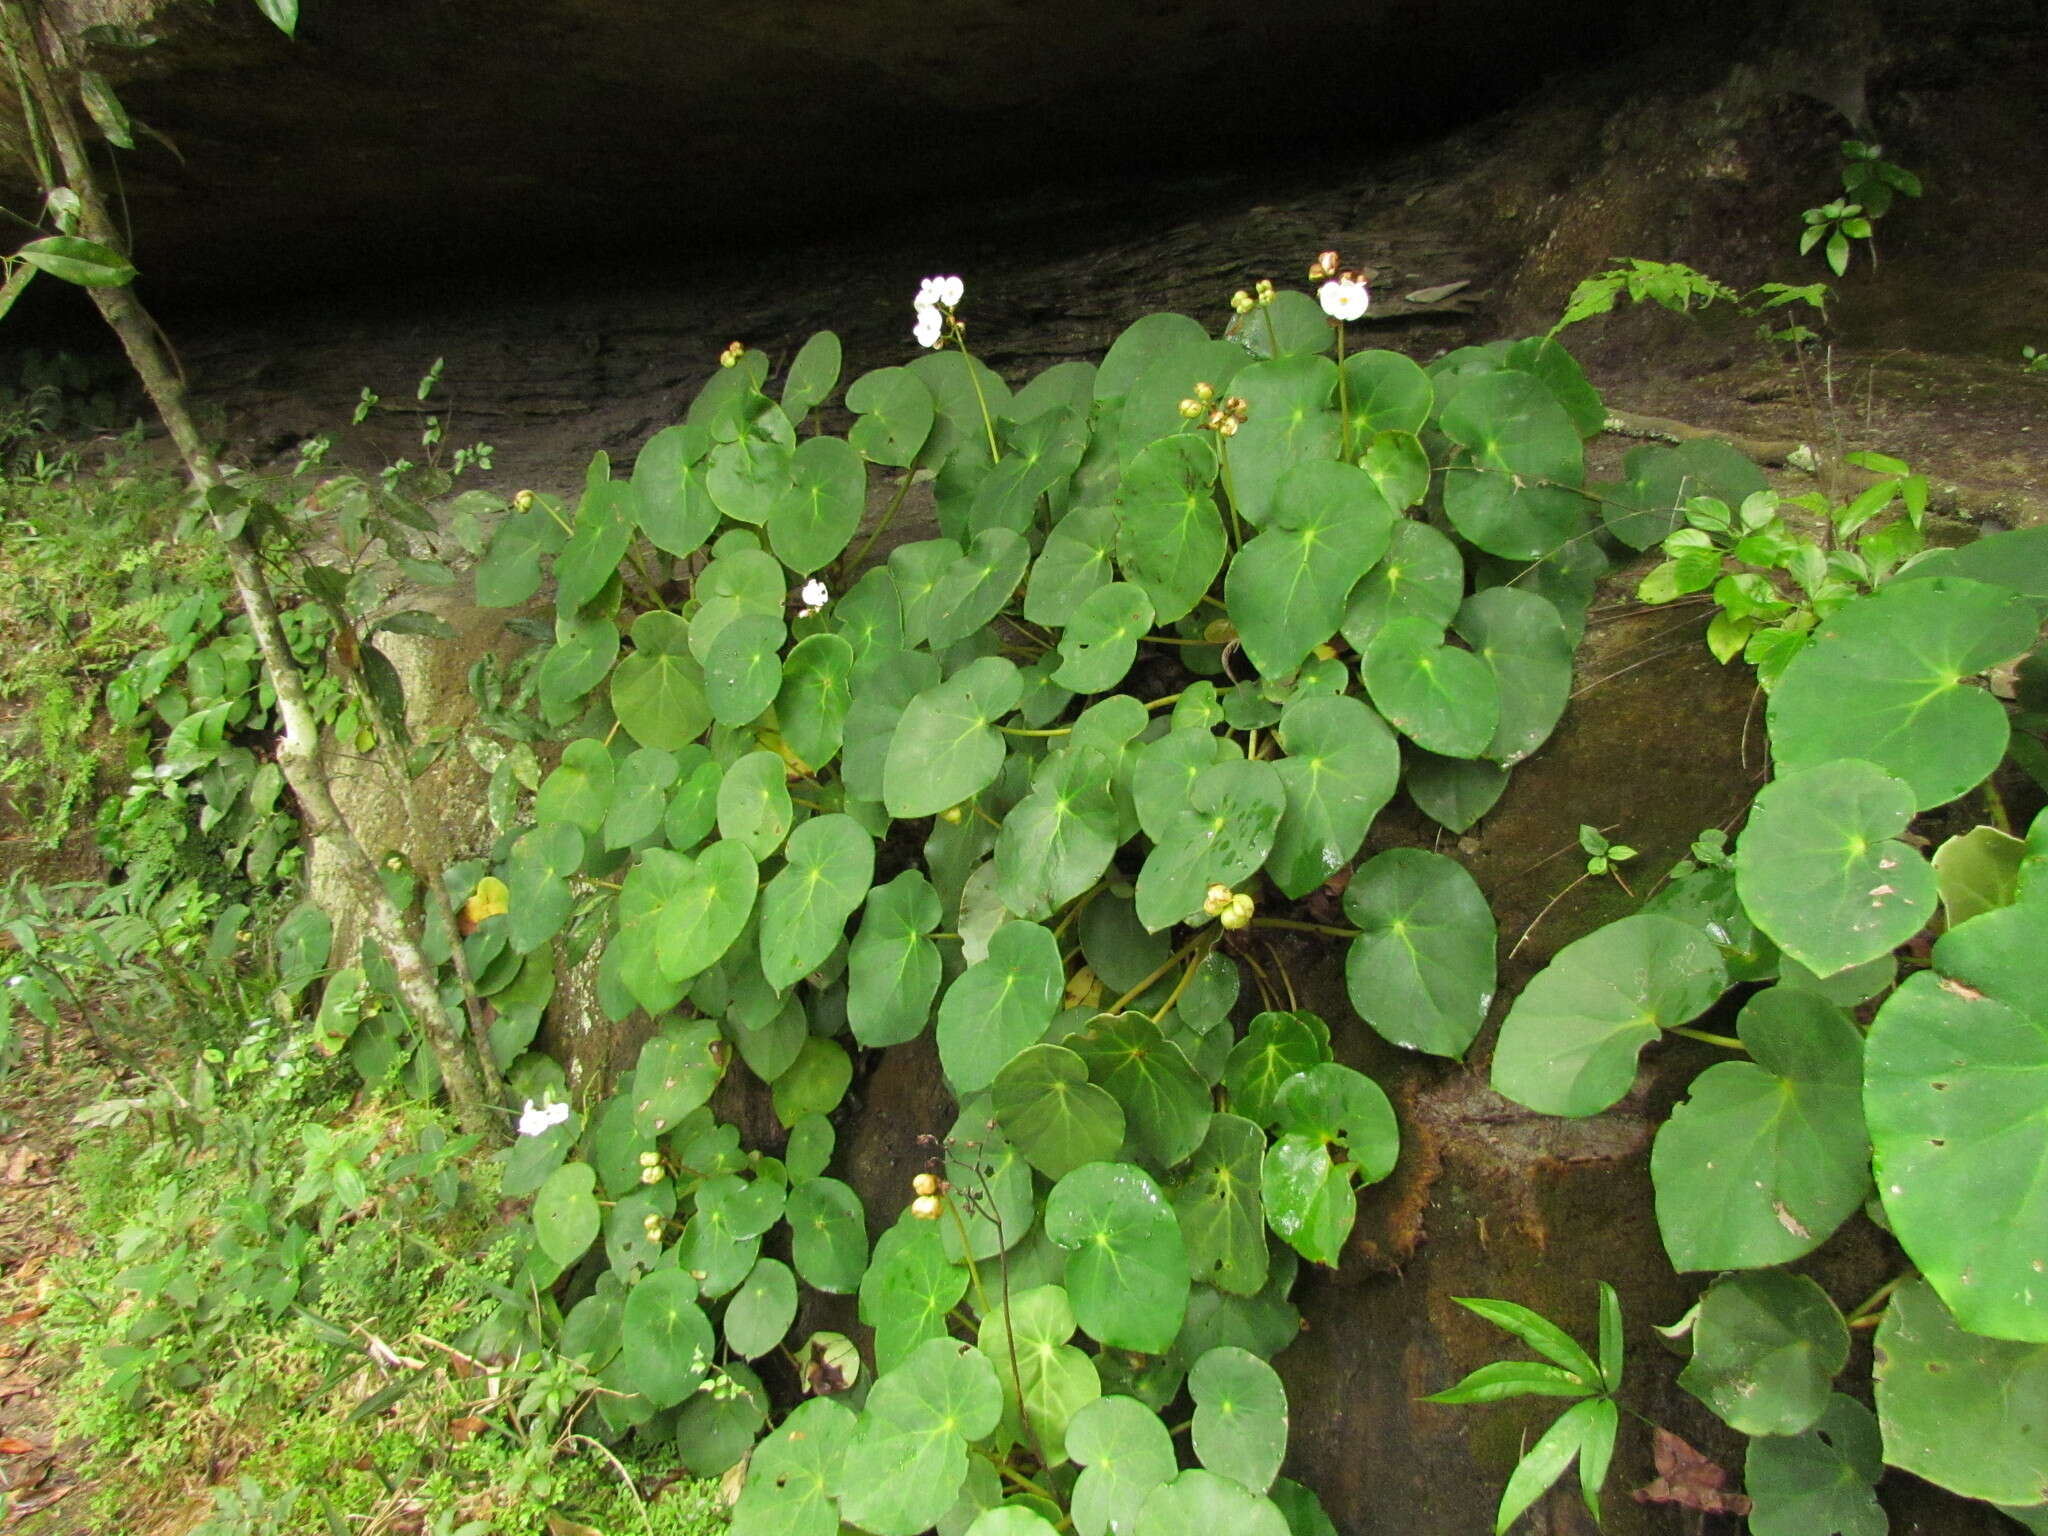 Image of <i>Begonia ciliatifolia</i> Funez & J. C. Jaramillo